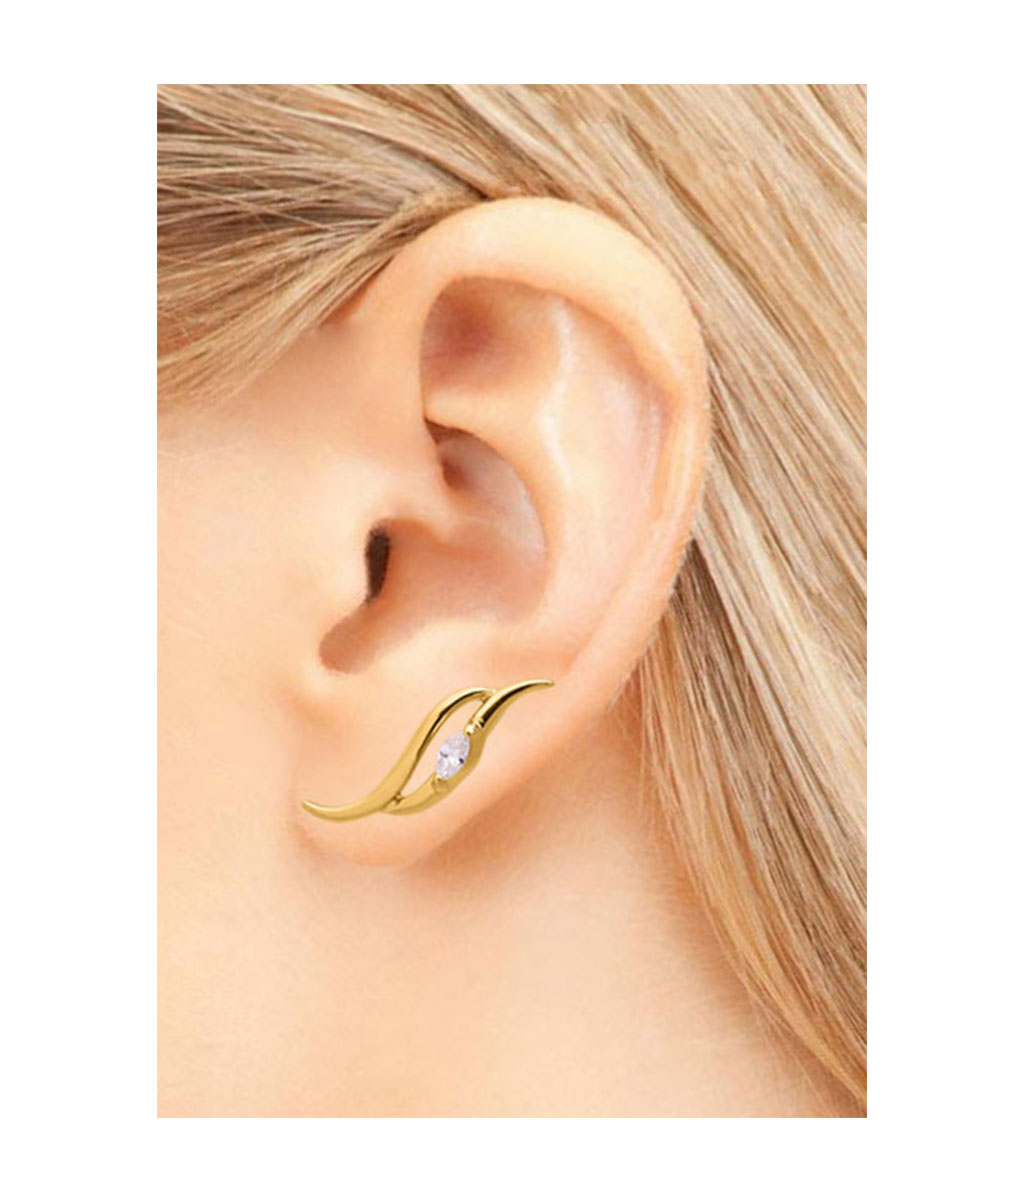 Silver Ear Sweep Up the Ear Earring ~ Wavy Ear Climber Ear Crawler Earring Pin